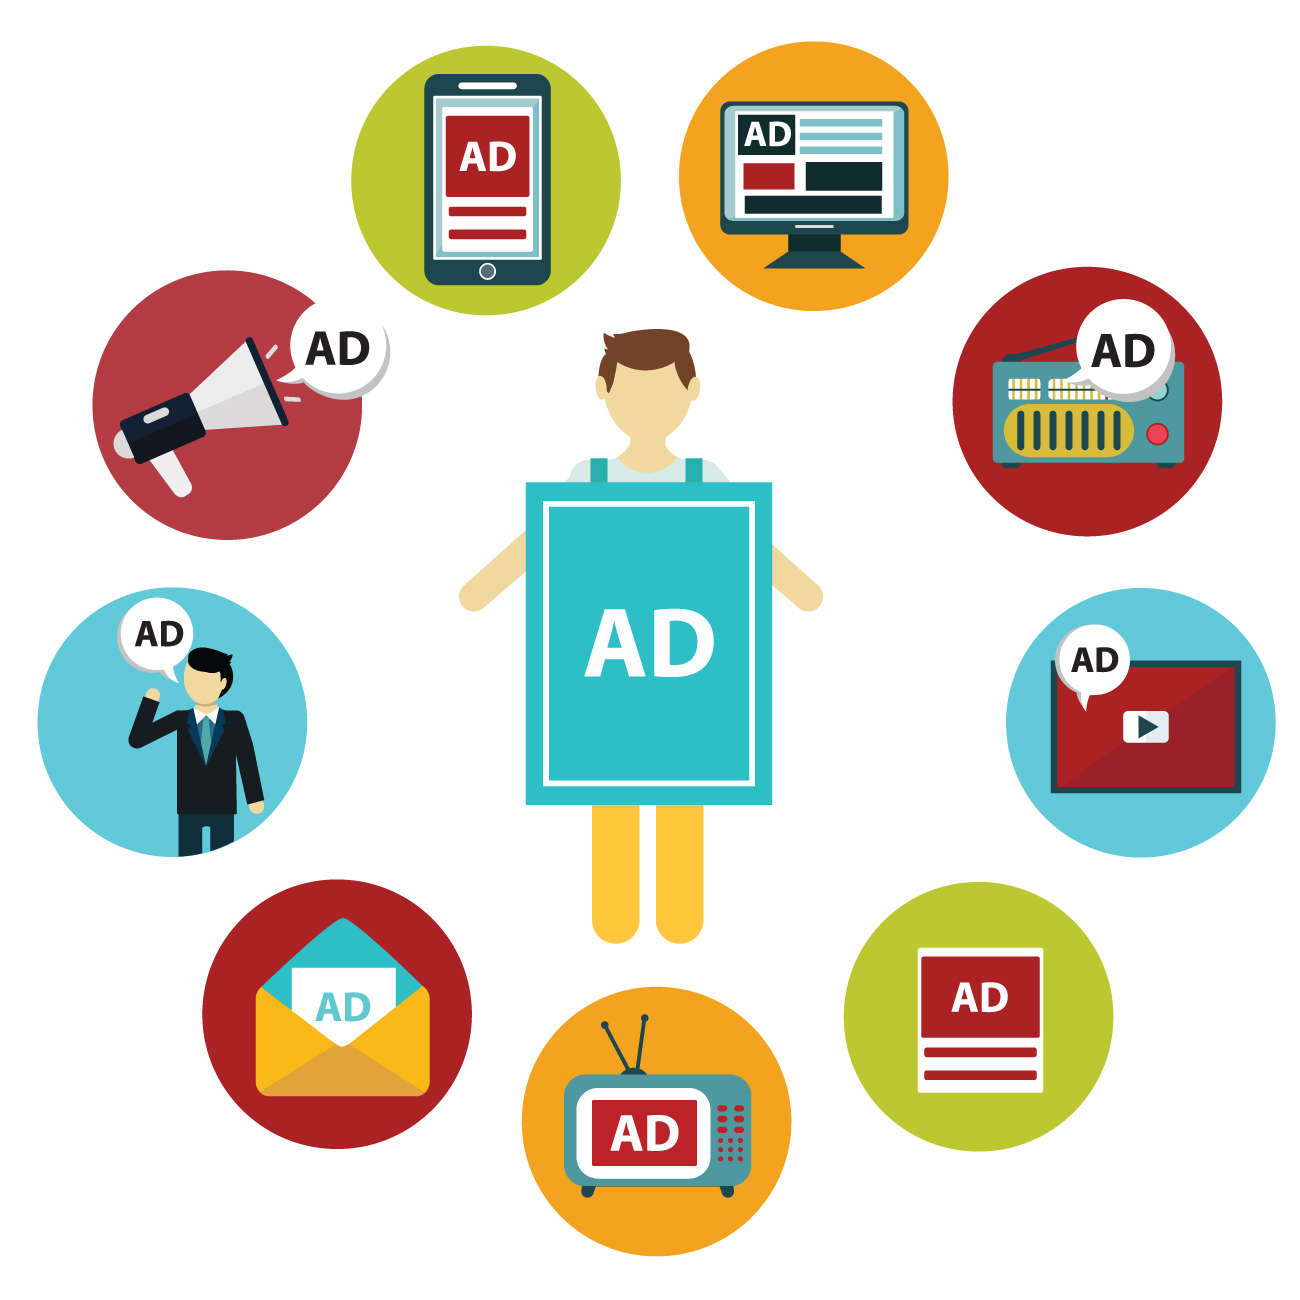 Multimedia and omni-channel marketing